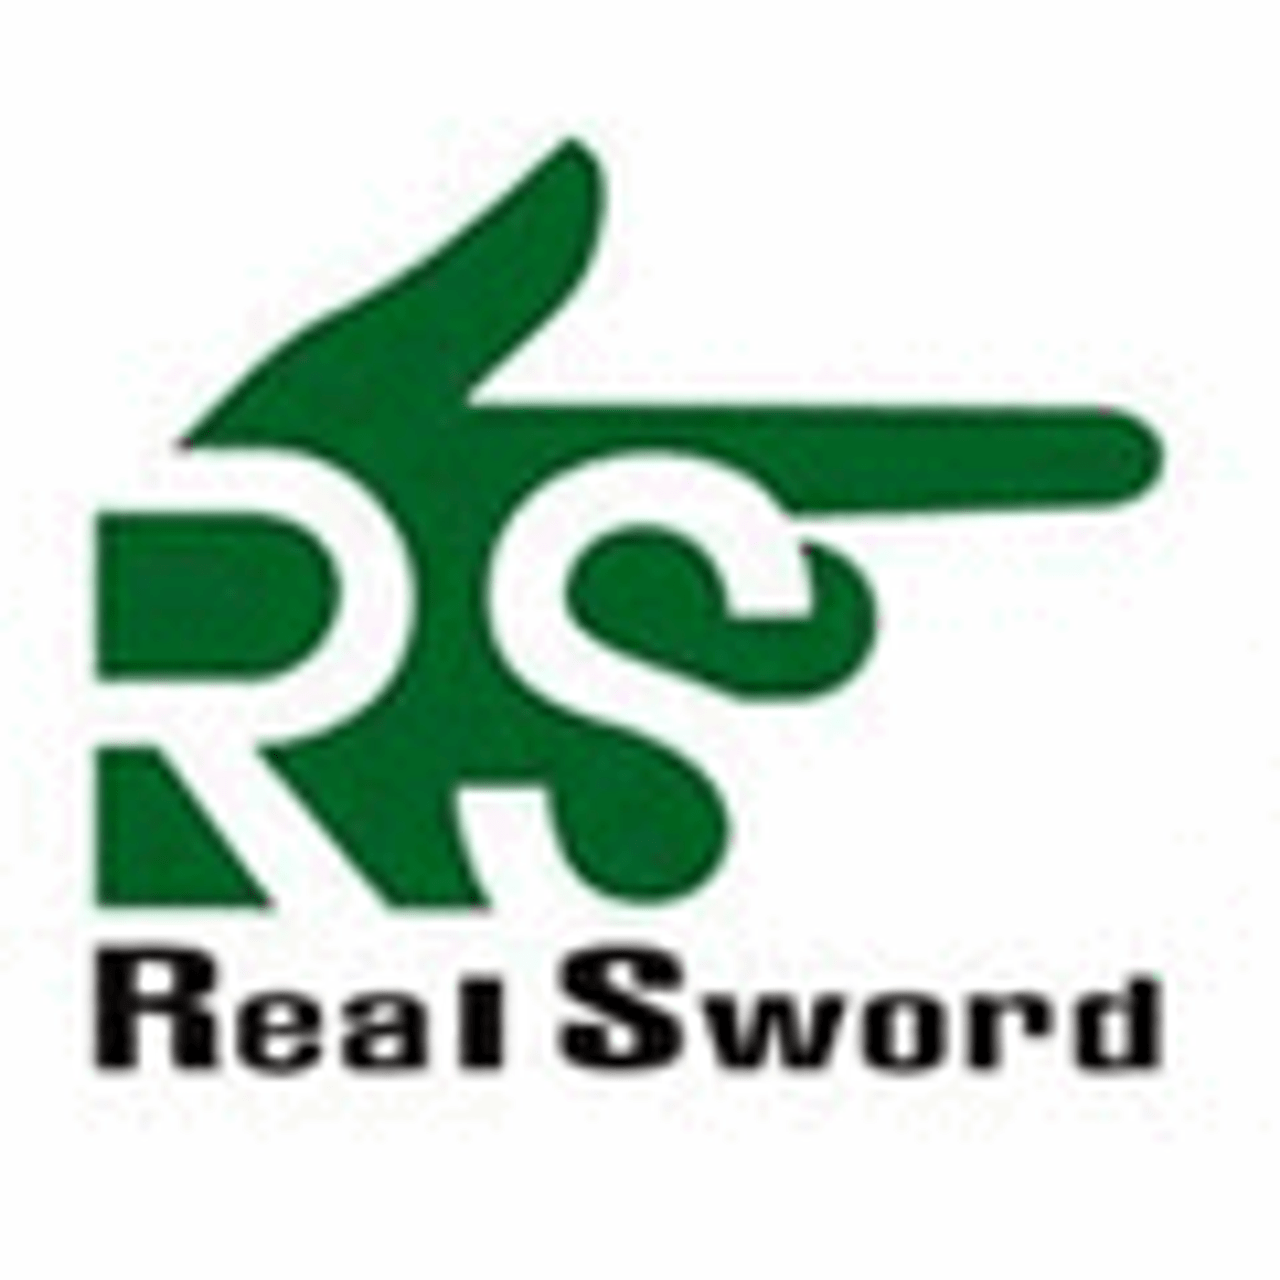 Real Sword AEGs